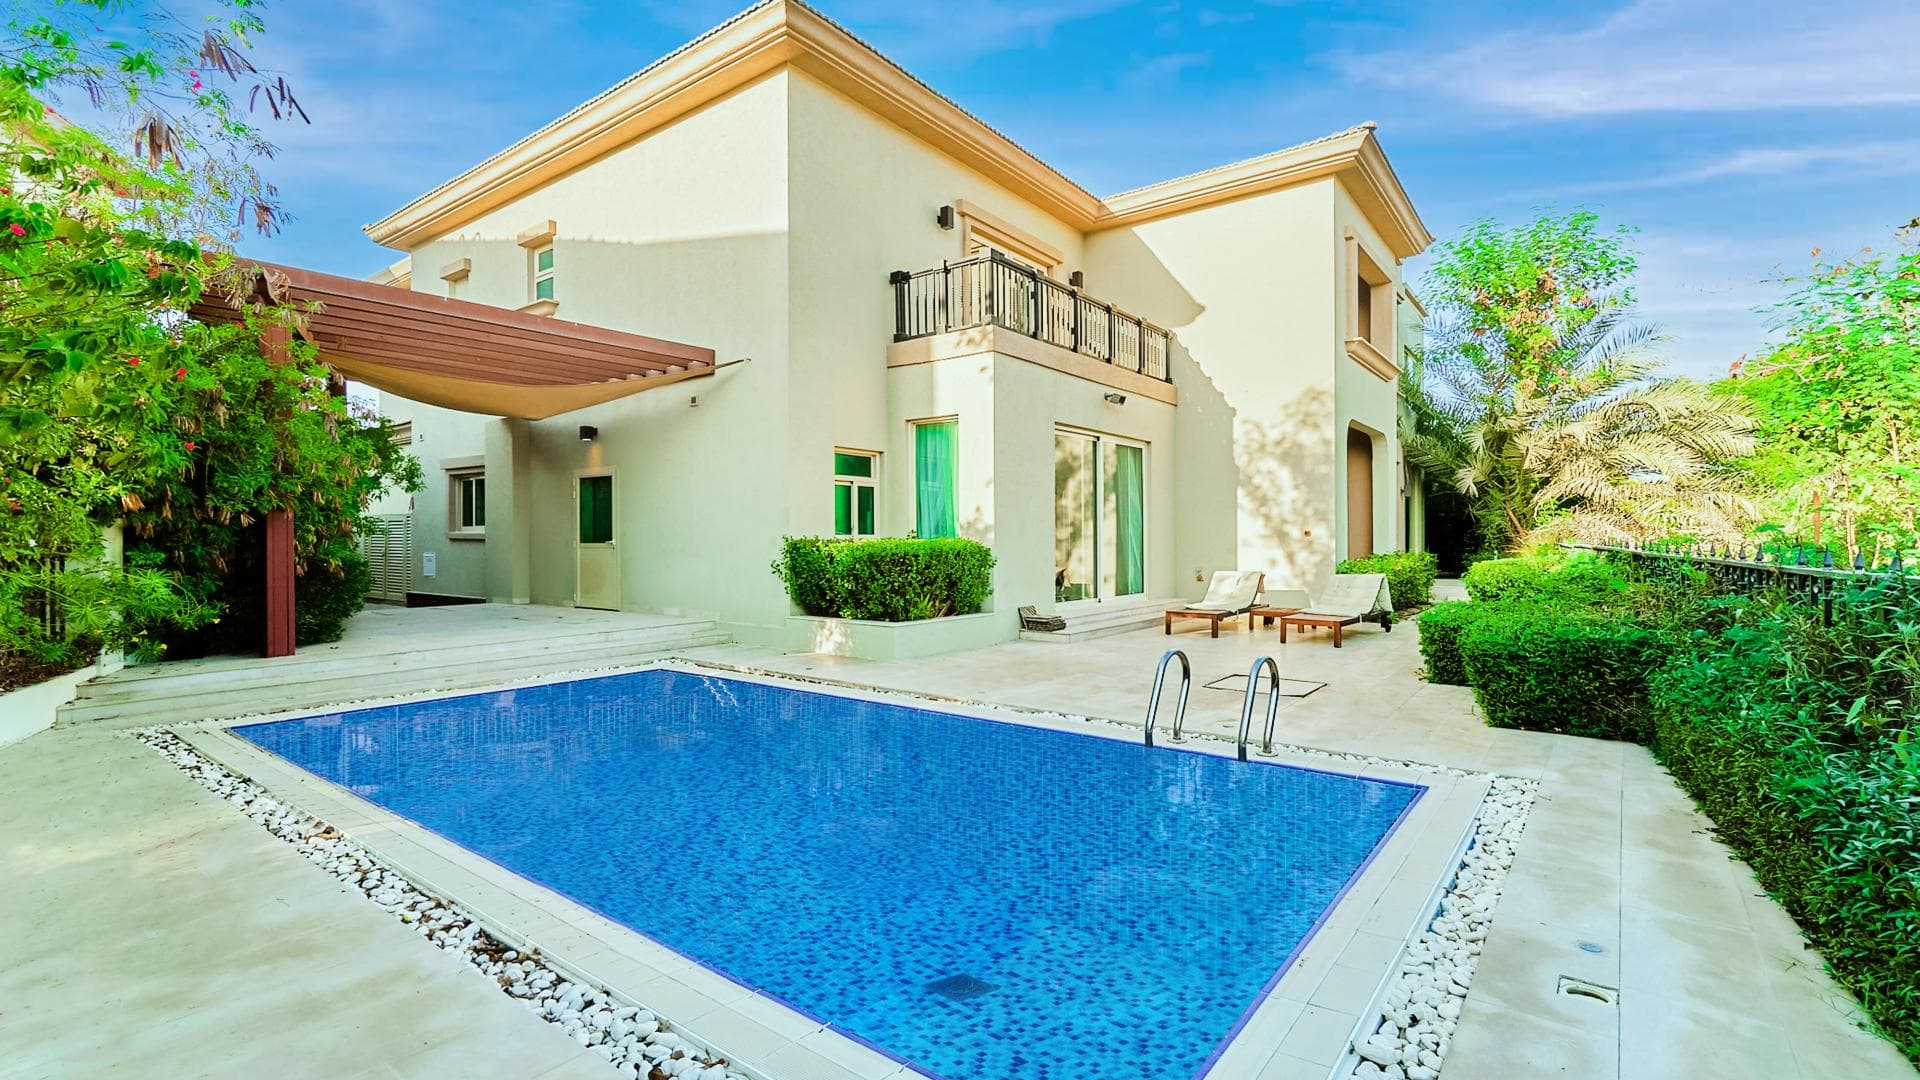 5 Bedroom Villa For Sale Mediterranean Clusters Lp12709 14d7b26e50bcf700.jpg